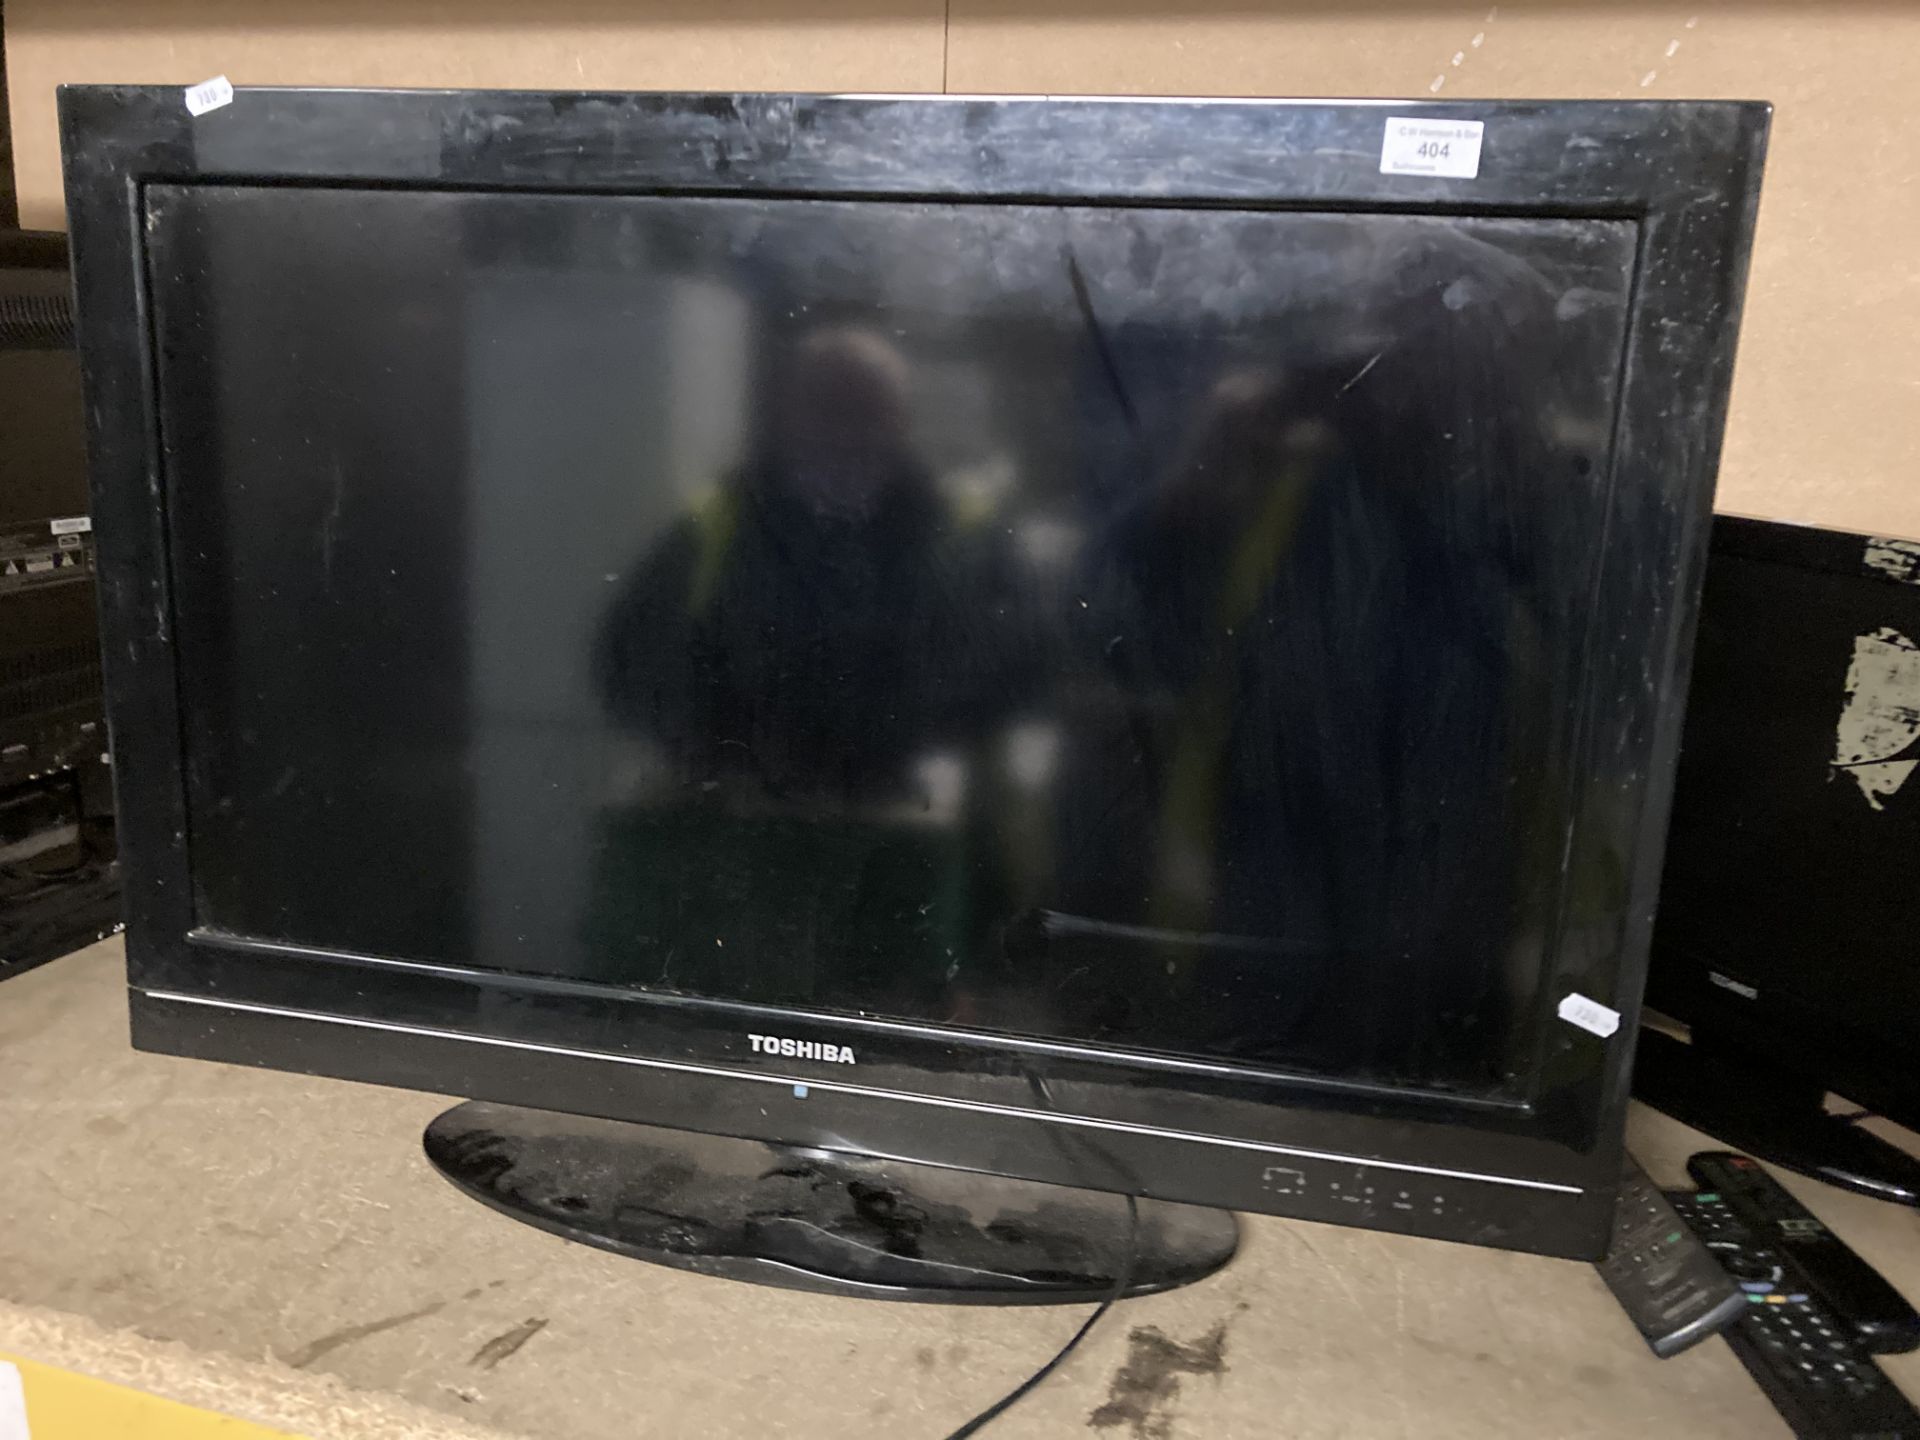 Toshiba LCD TV model 32BV701B 32" TV no remote (saleroom location: PO)